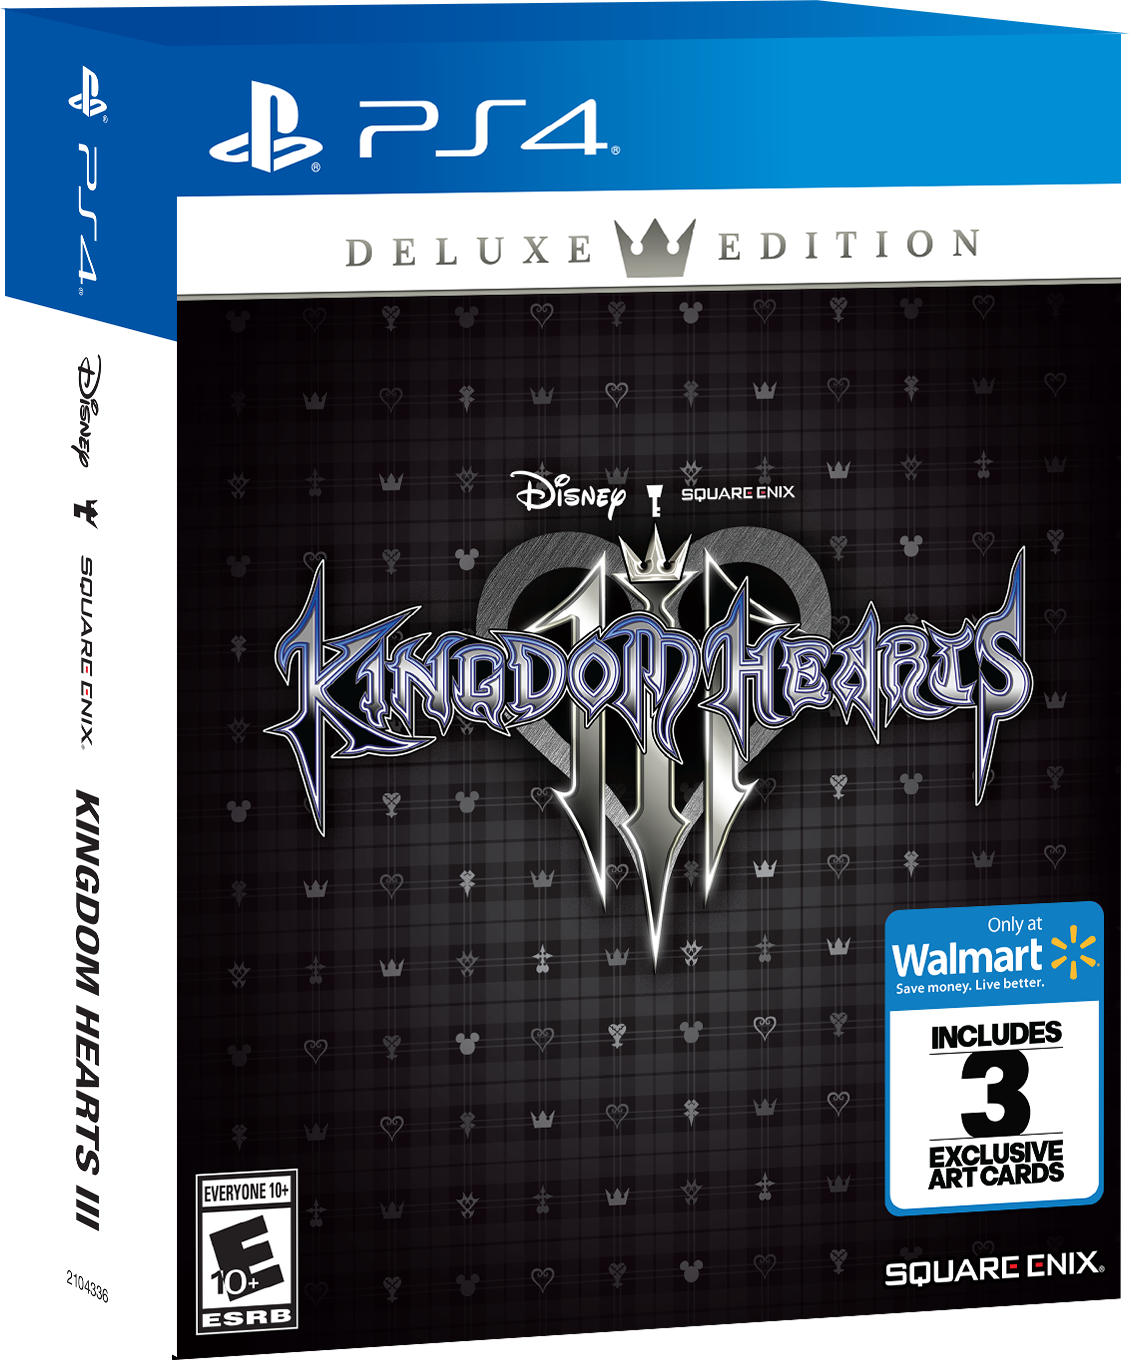 Walmart Exclusive: Kingdom Hearts 3 Deluxe Edition, Square Enix